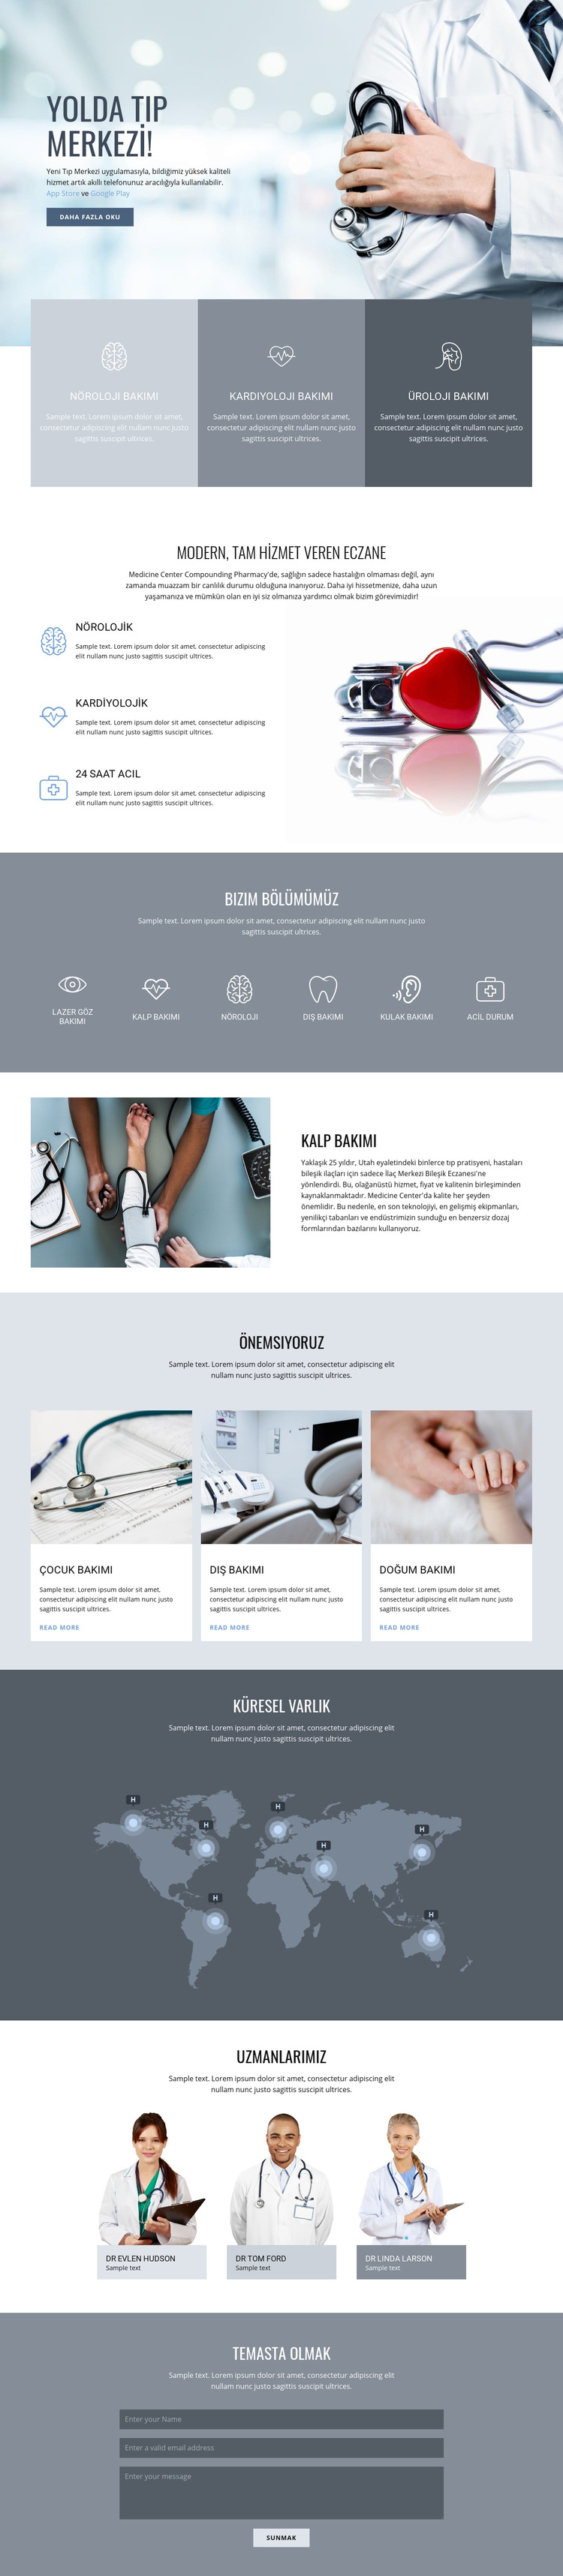 Kaliteli tıp merkezi WordPress Teması